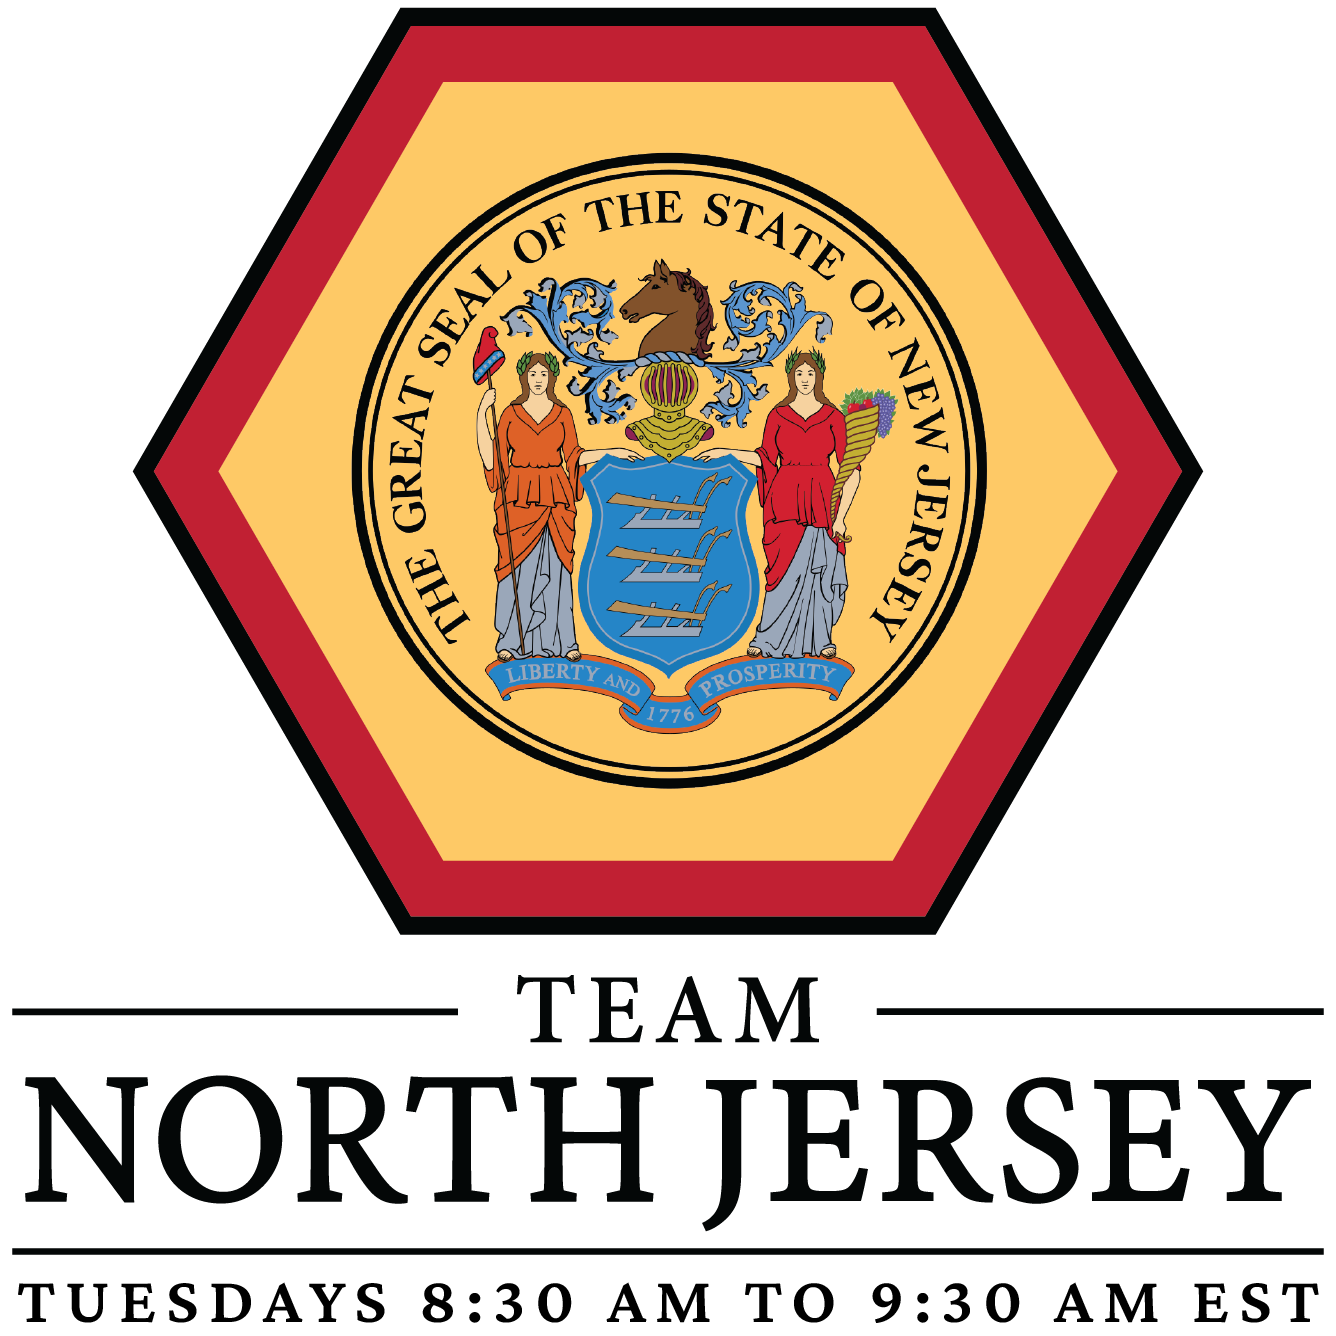 Visit Team North Jersey Huddle - Tuesdays 8:30 AM